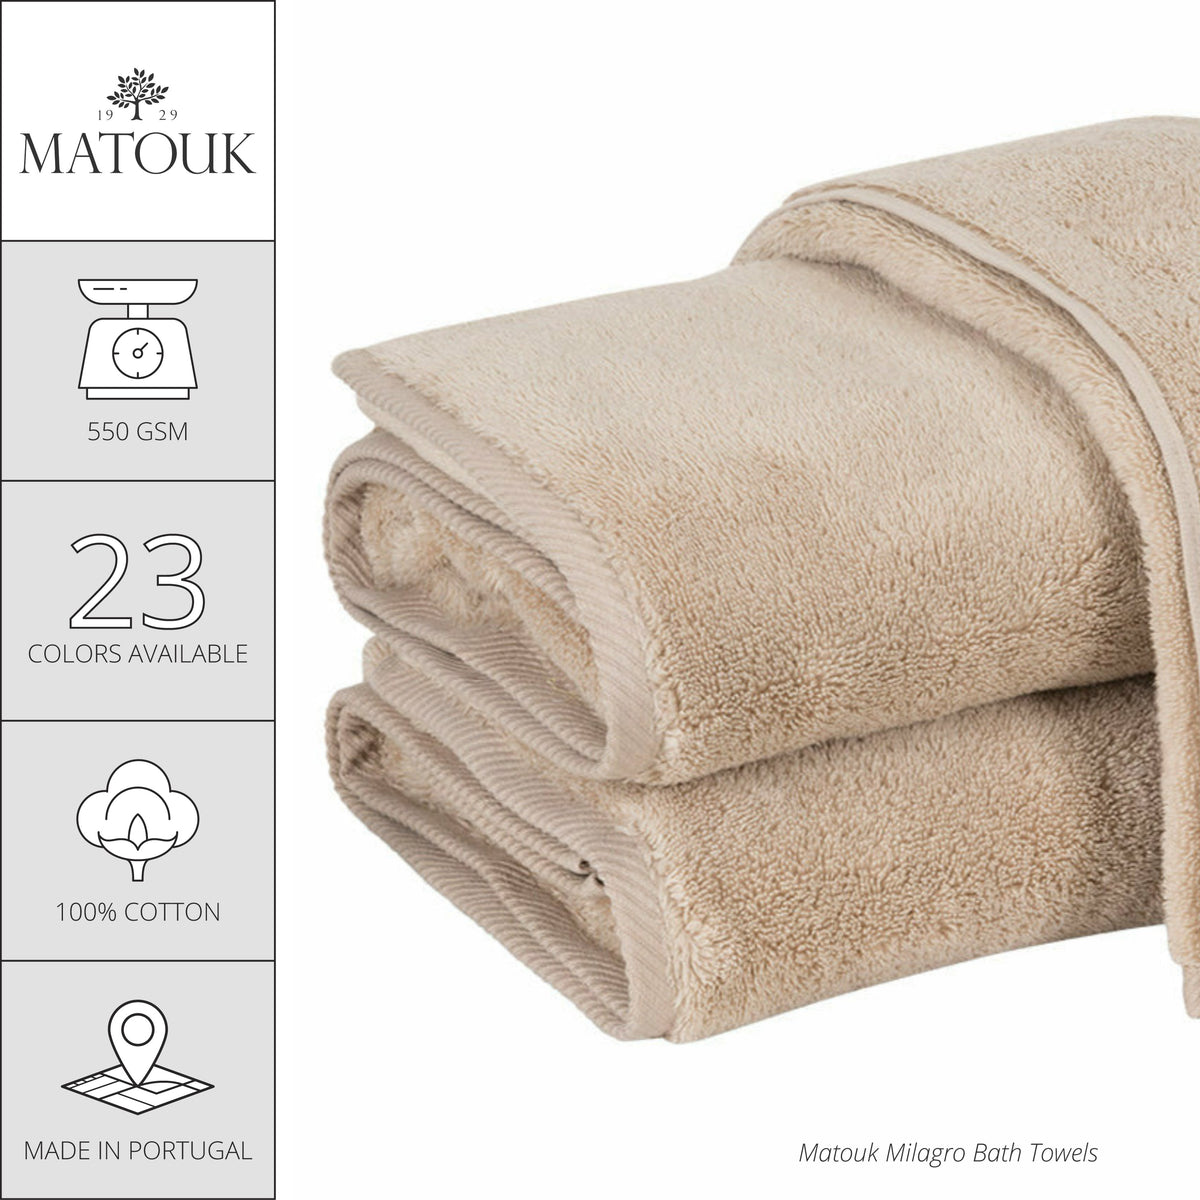 Matouk Milagro Bath Towels and Mats - Periwinkle